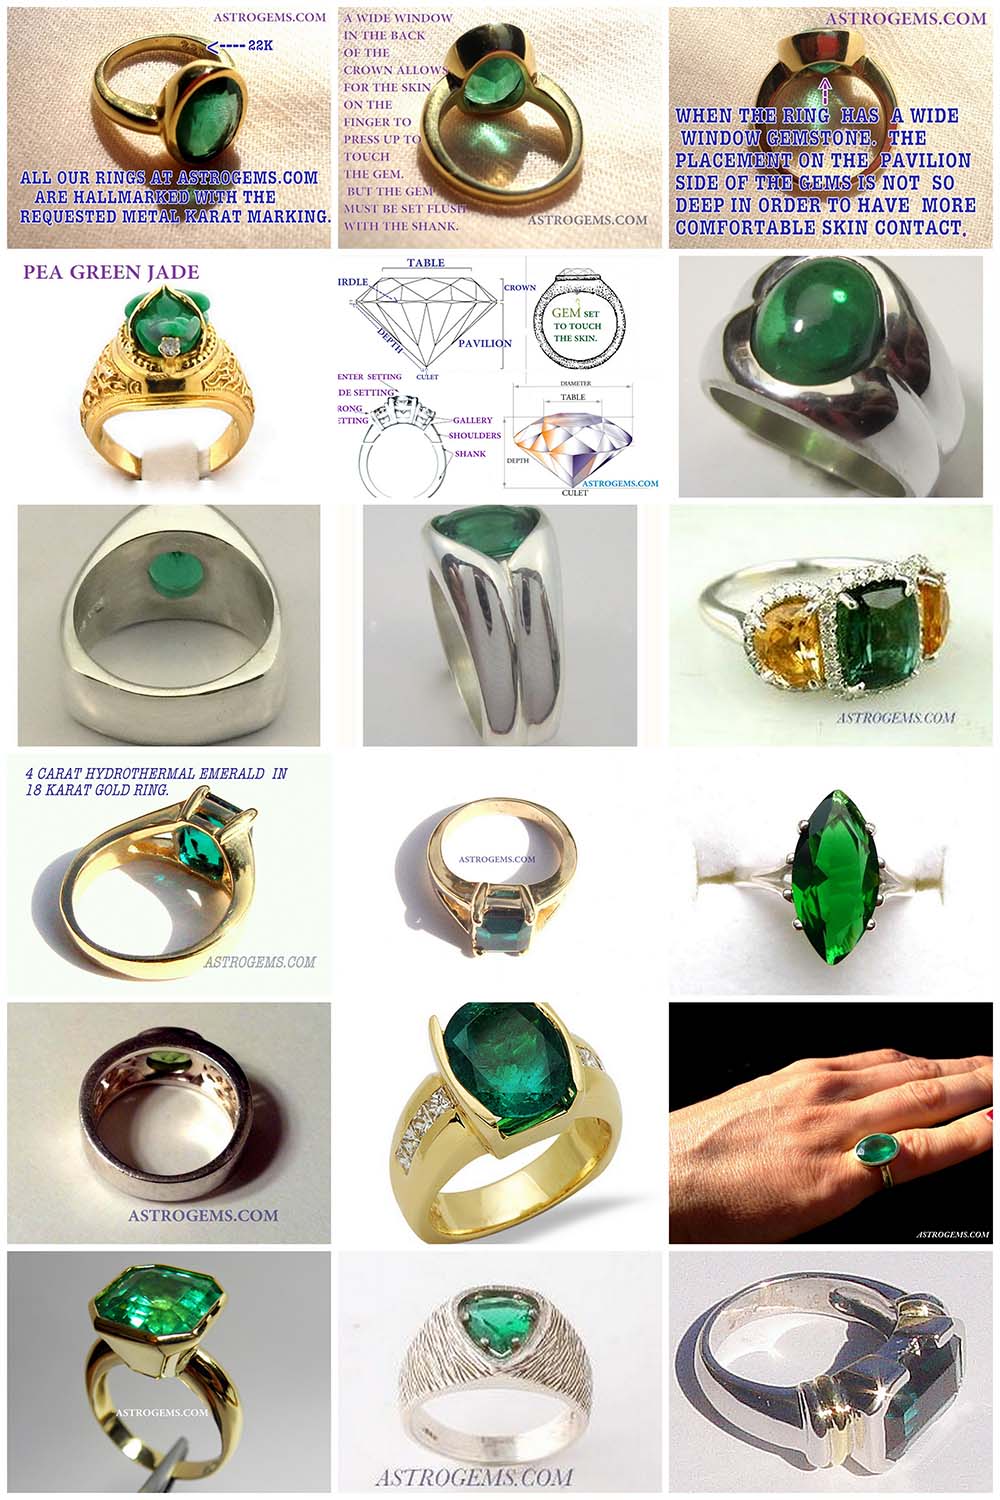 Astrogems can custom make any vedic emerald ring you desire.